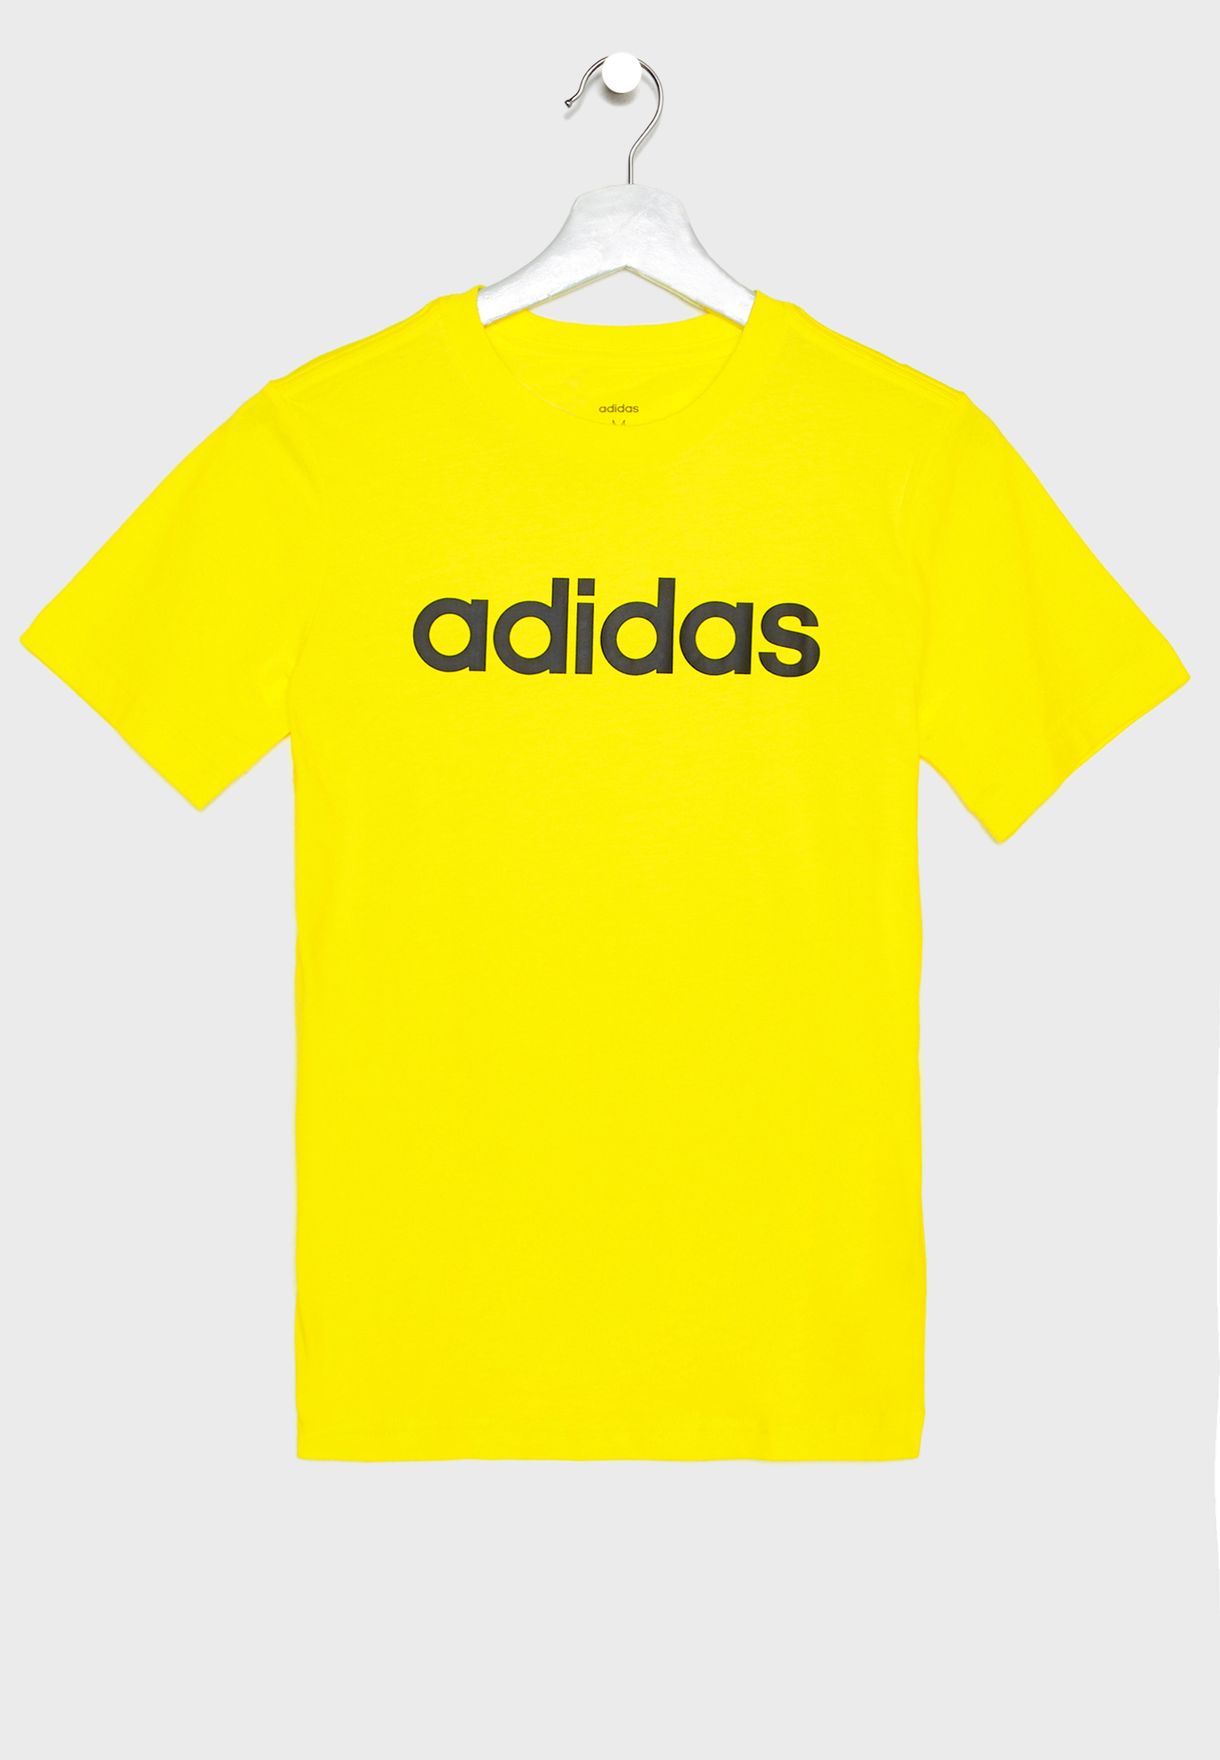 adidas yellow t shirt